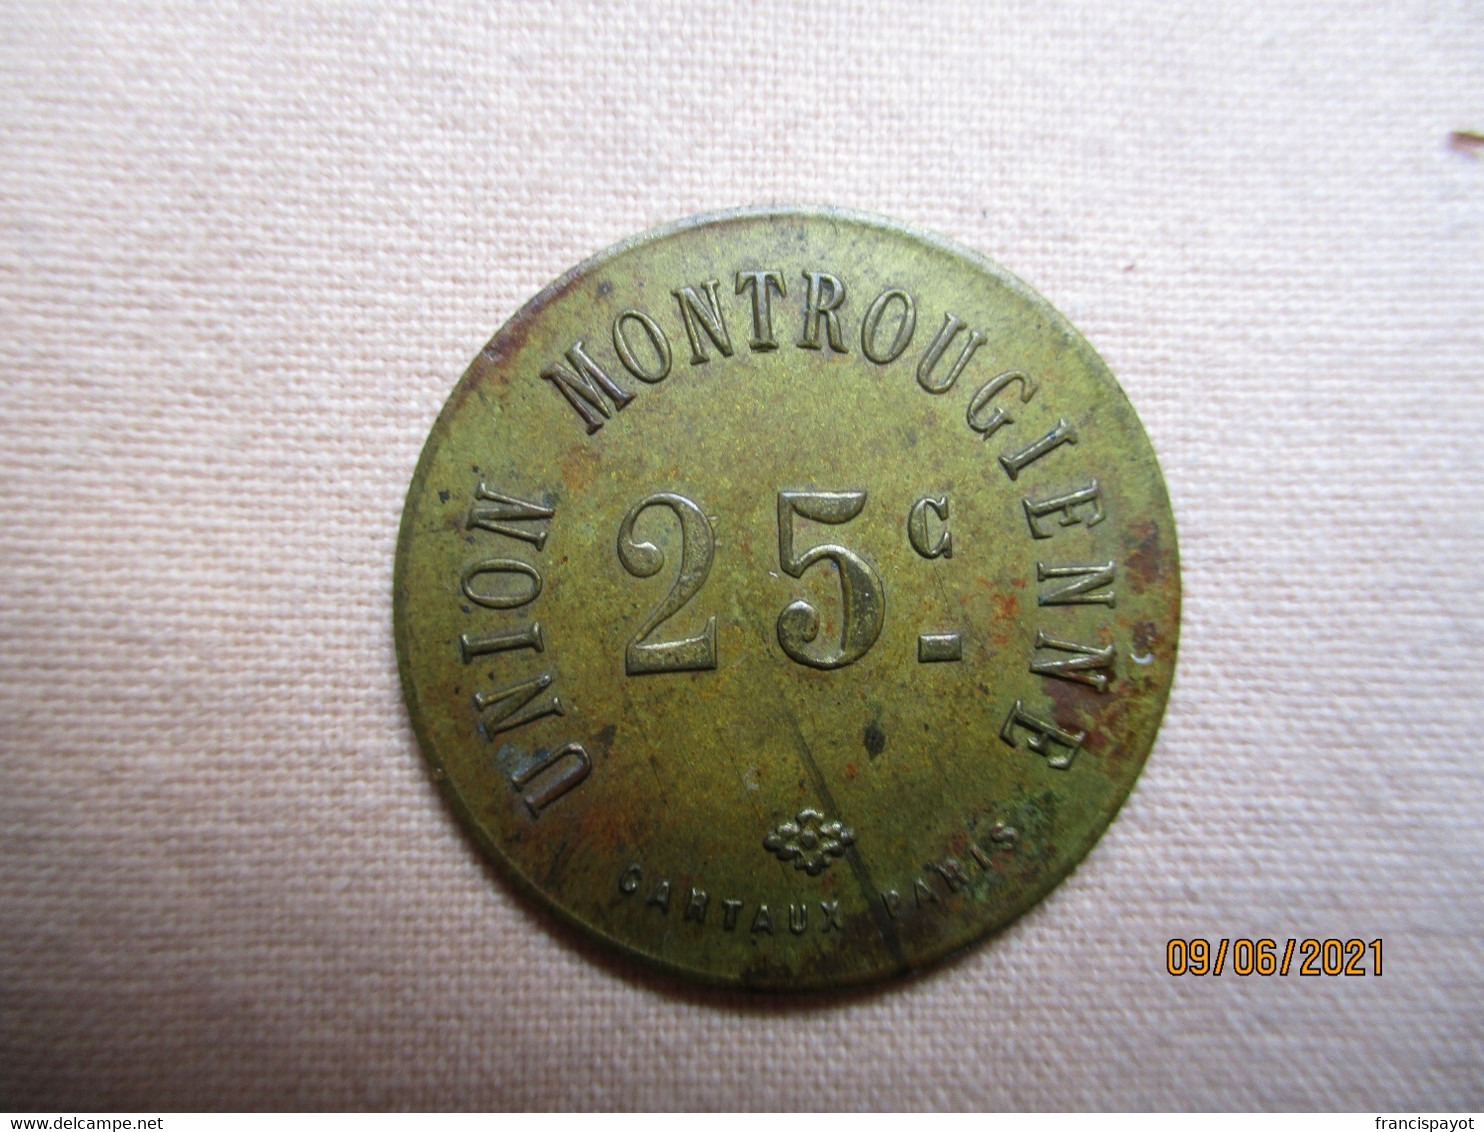 France: Union Montrougienne 25 Centimes - Notgeld